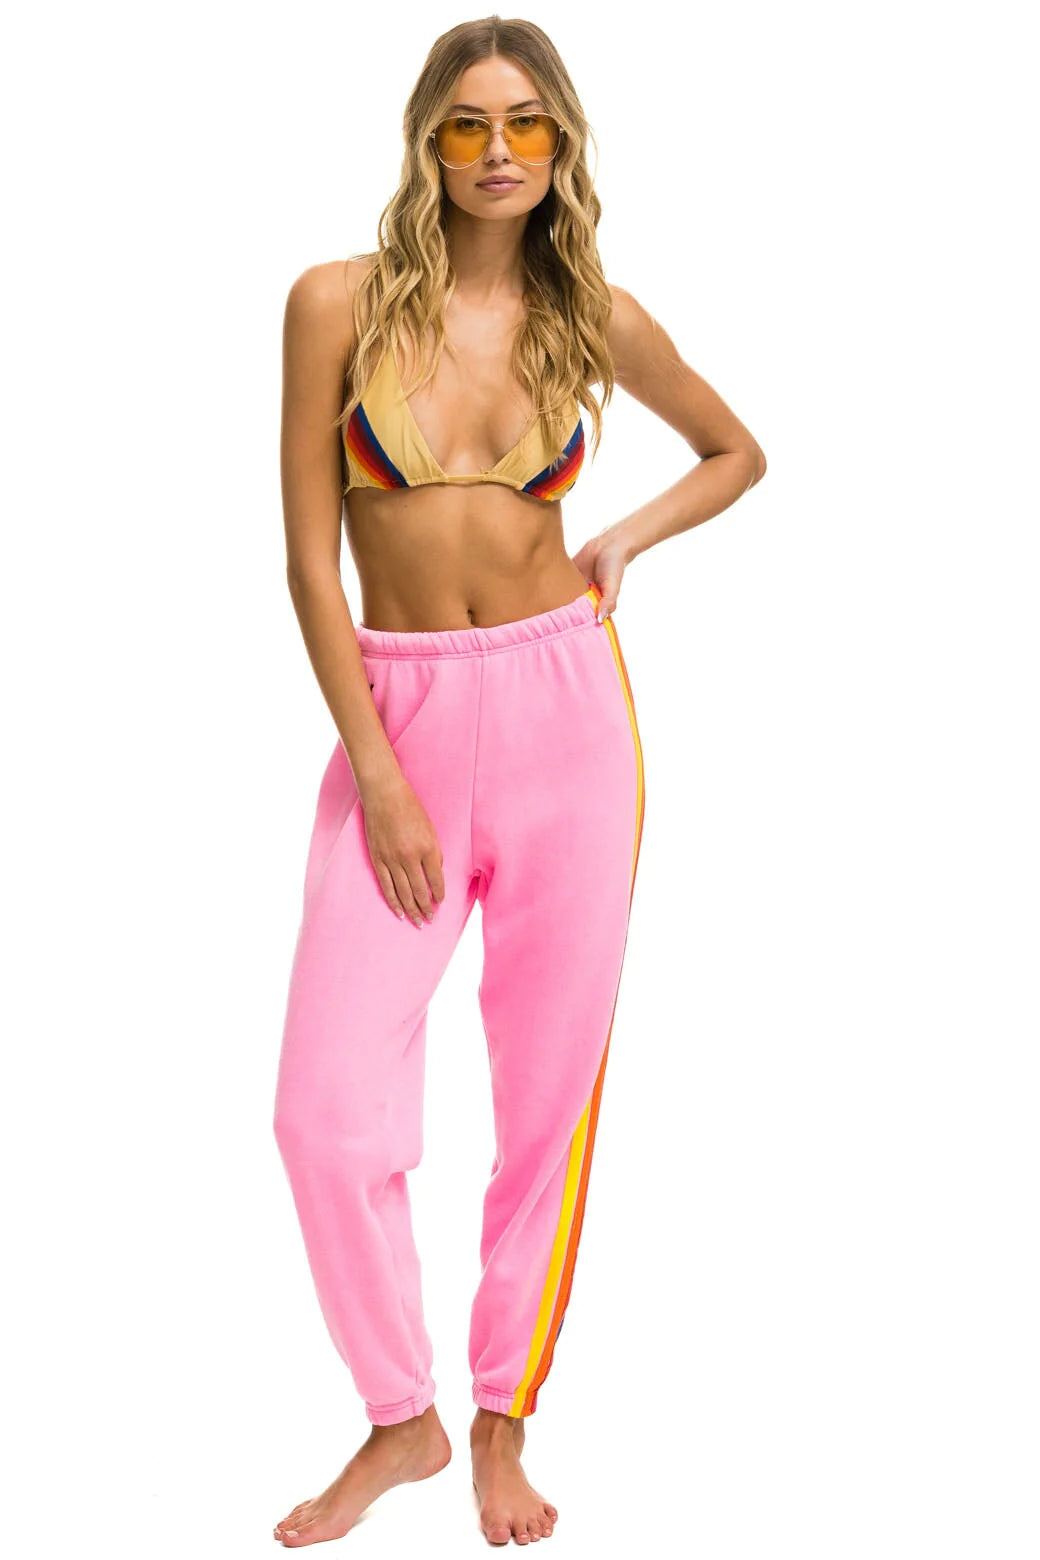 Aviator Nation - 5 Stripe Women’s Sweatpants - Neon Pink/Yellow/Purple